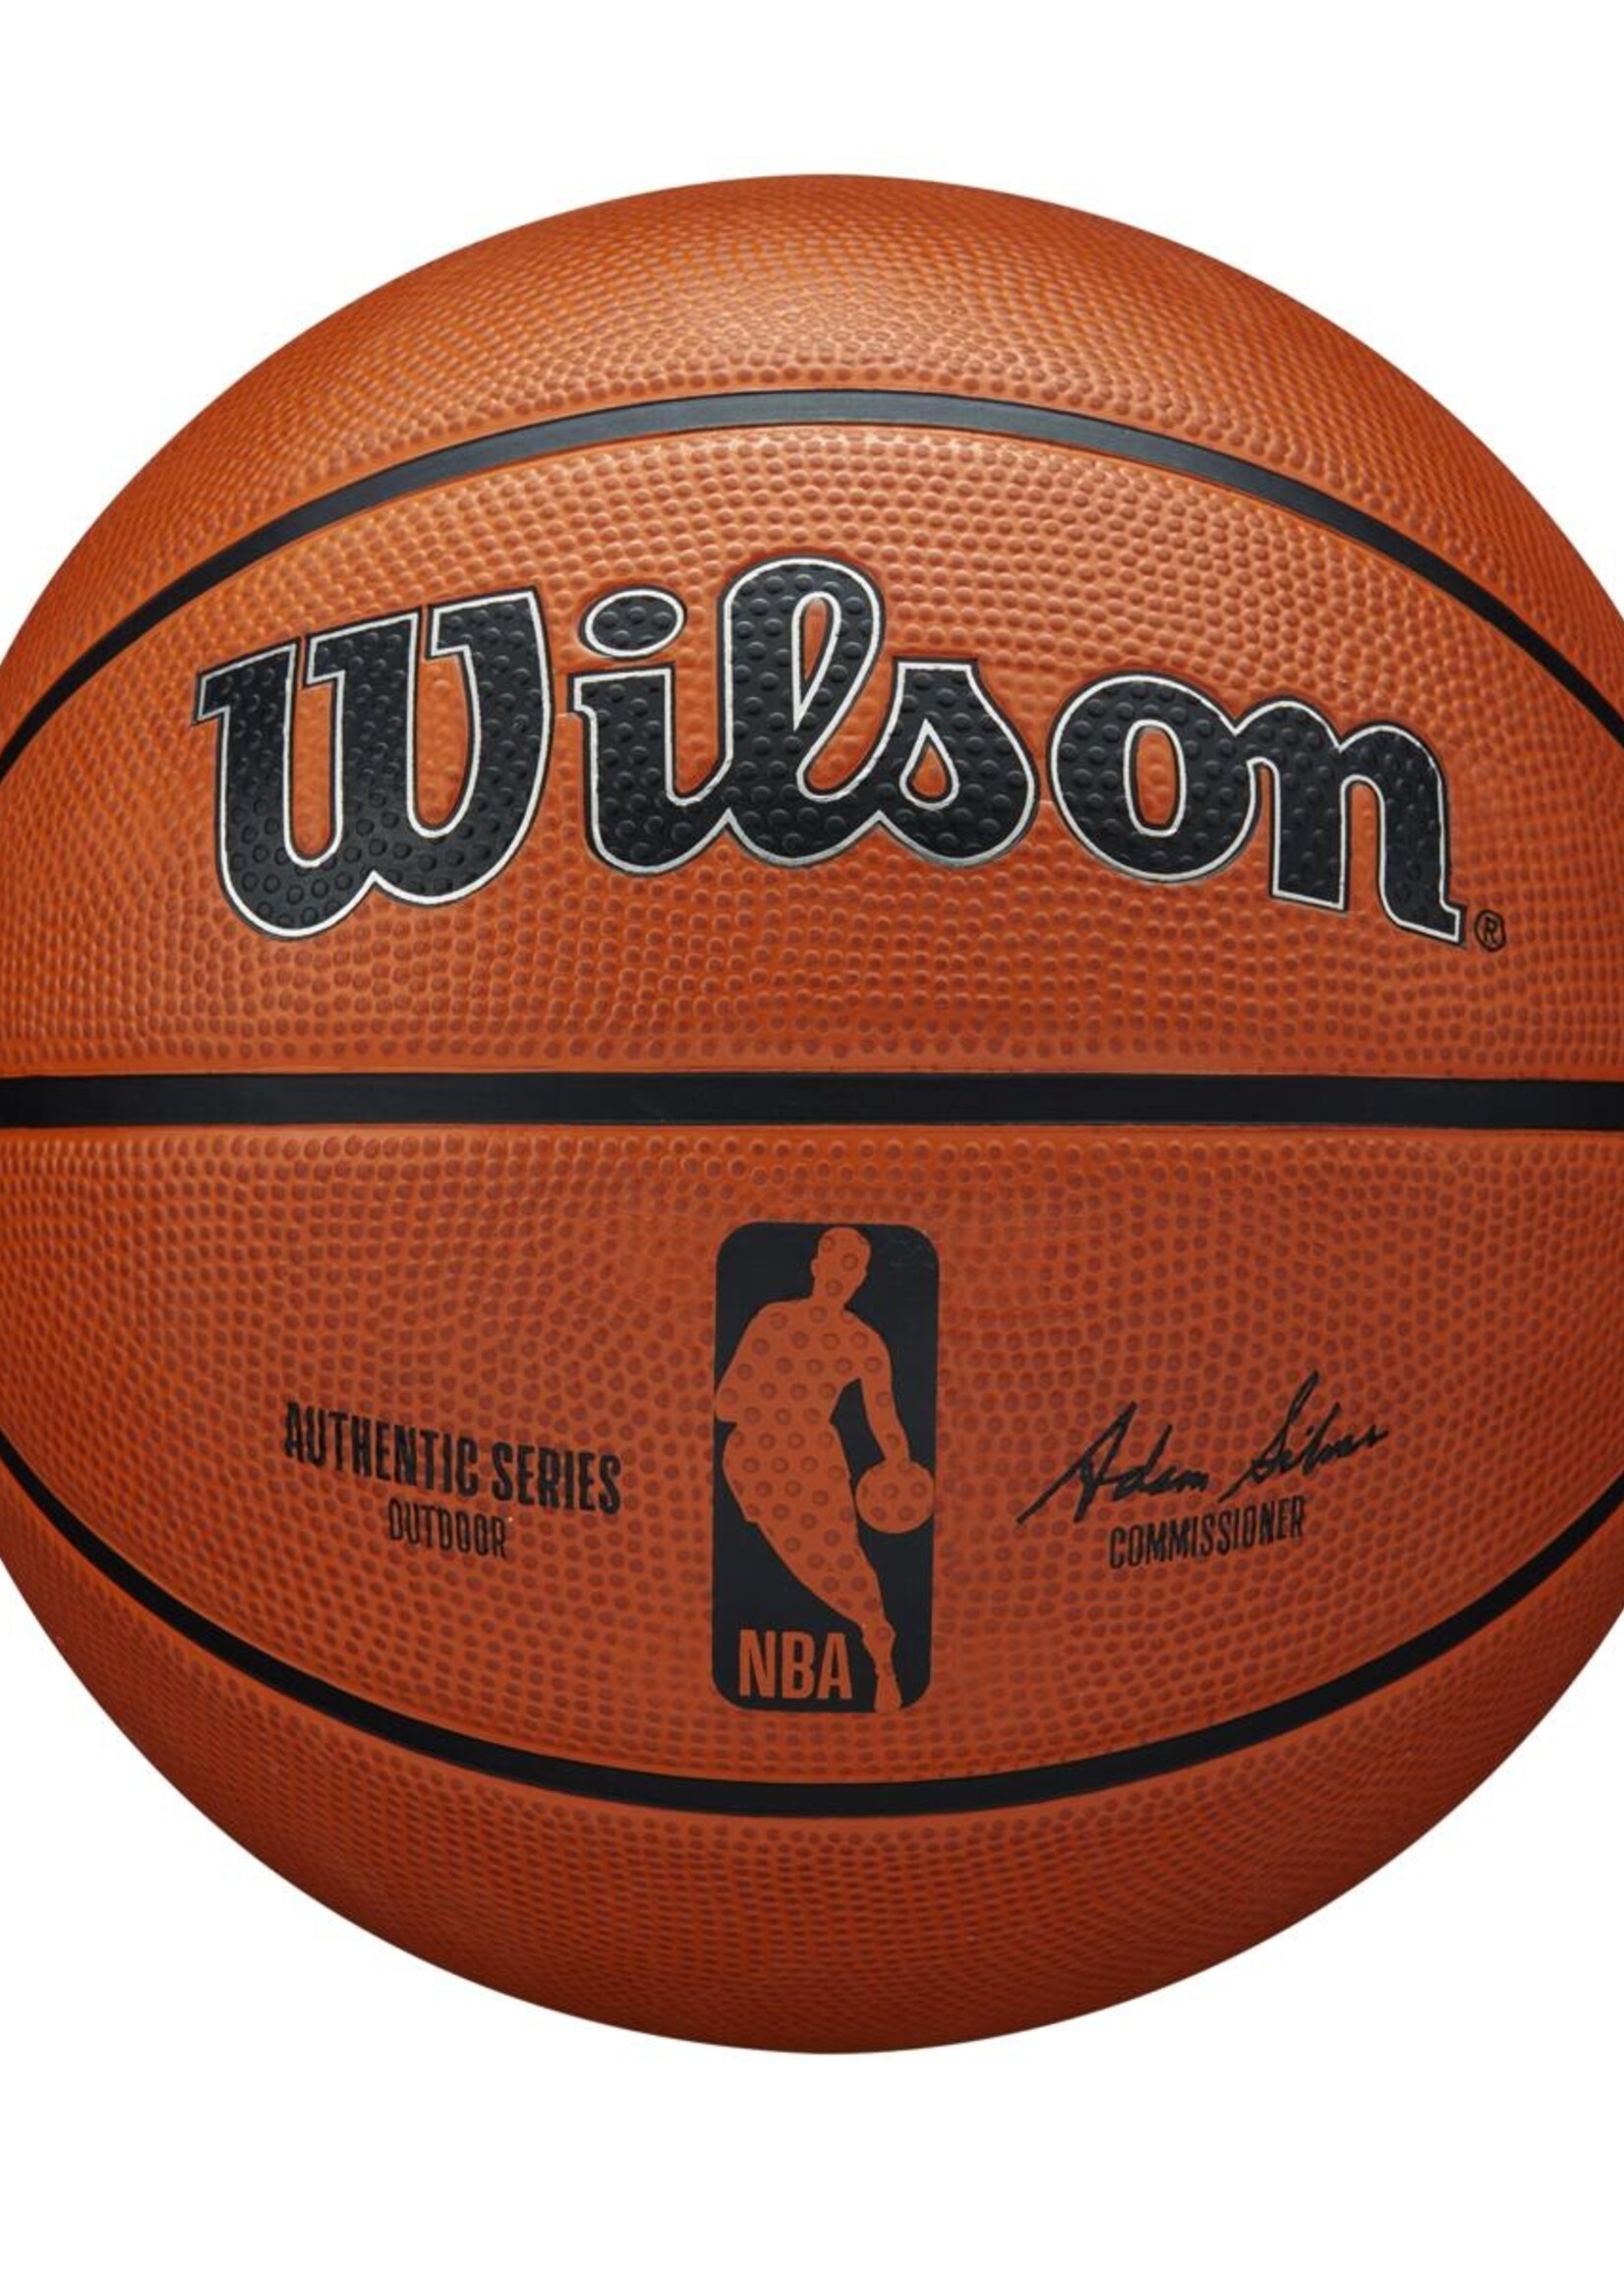 Wilson Wilson NBA Authentic Series Outdoor Basketball (7)